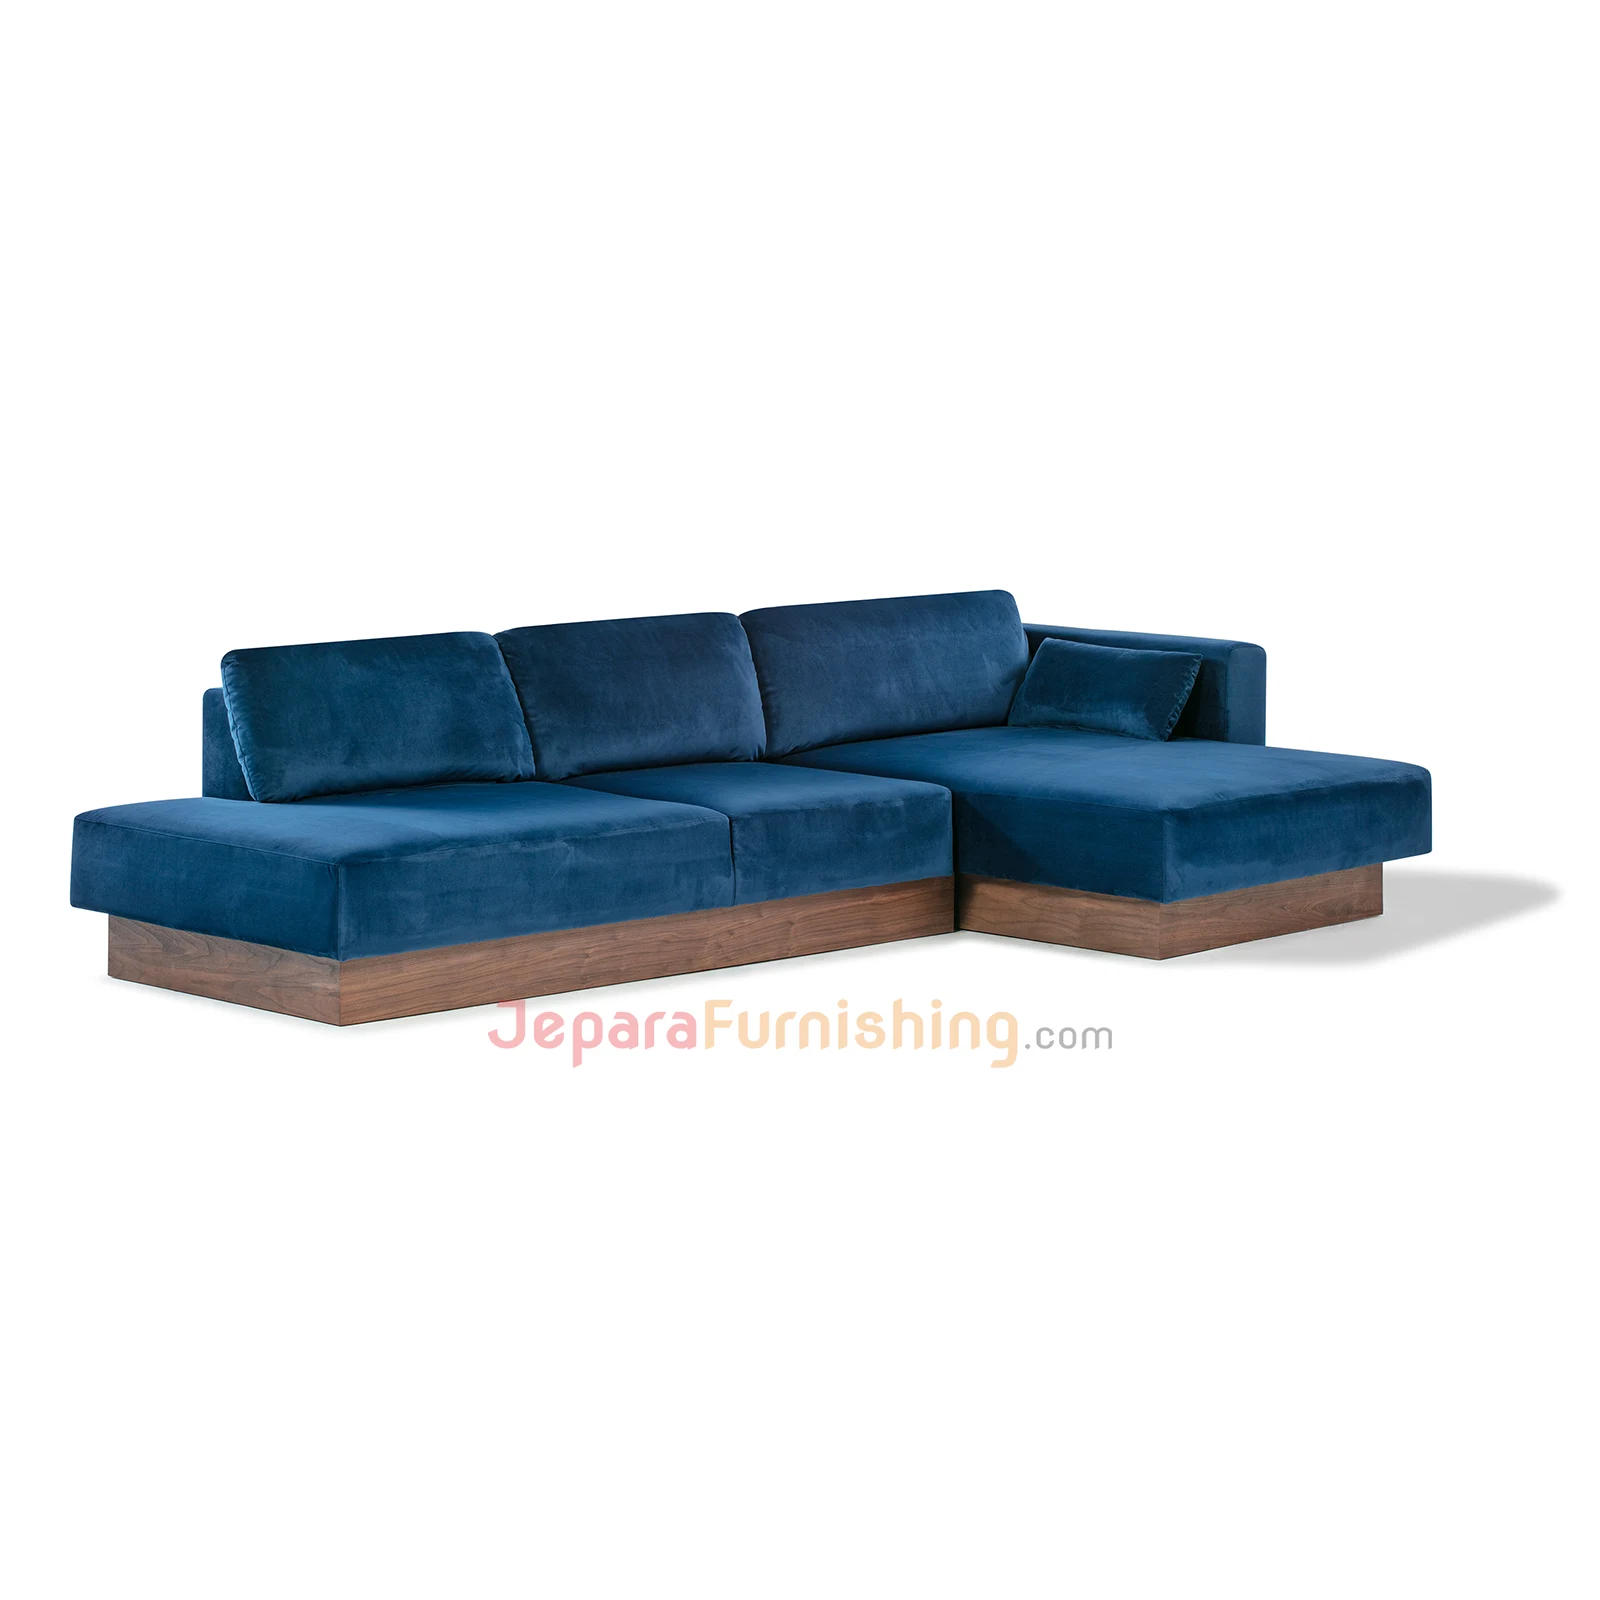 Gery Blue Sectional Sofa Minimalis (2)